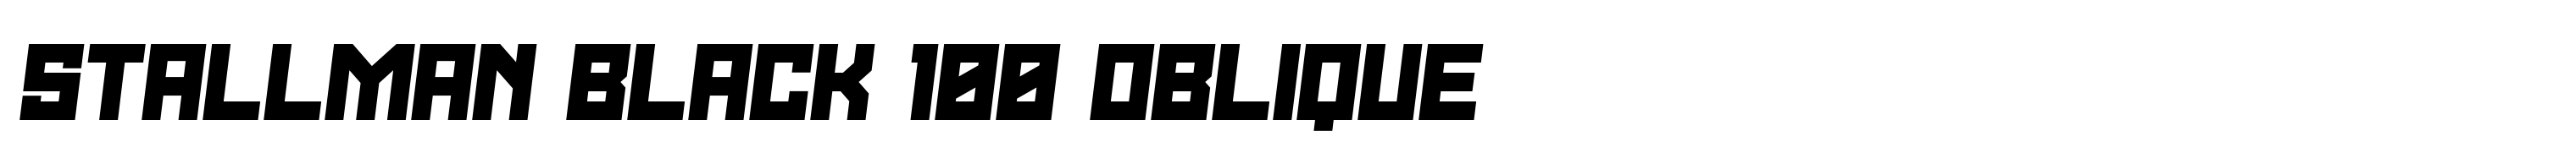 Stallman Black 100 Oblique